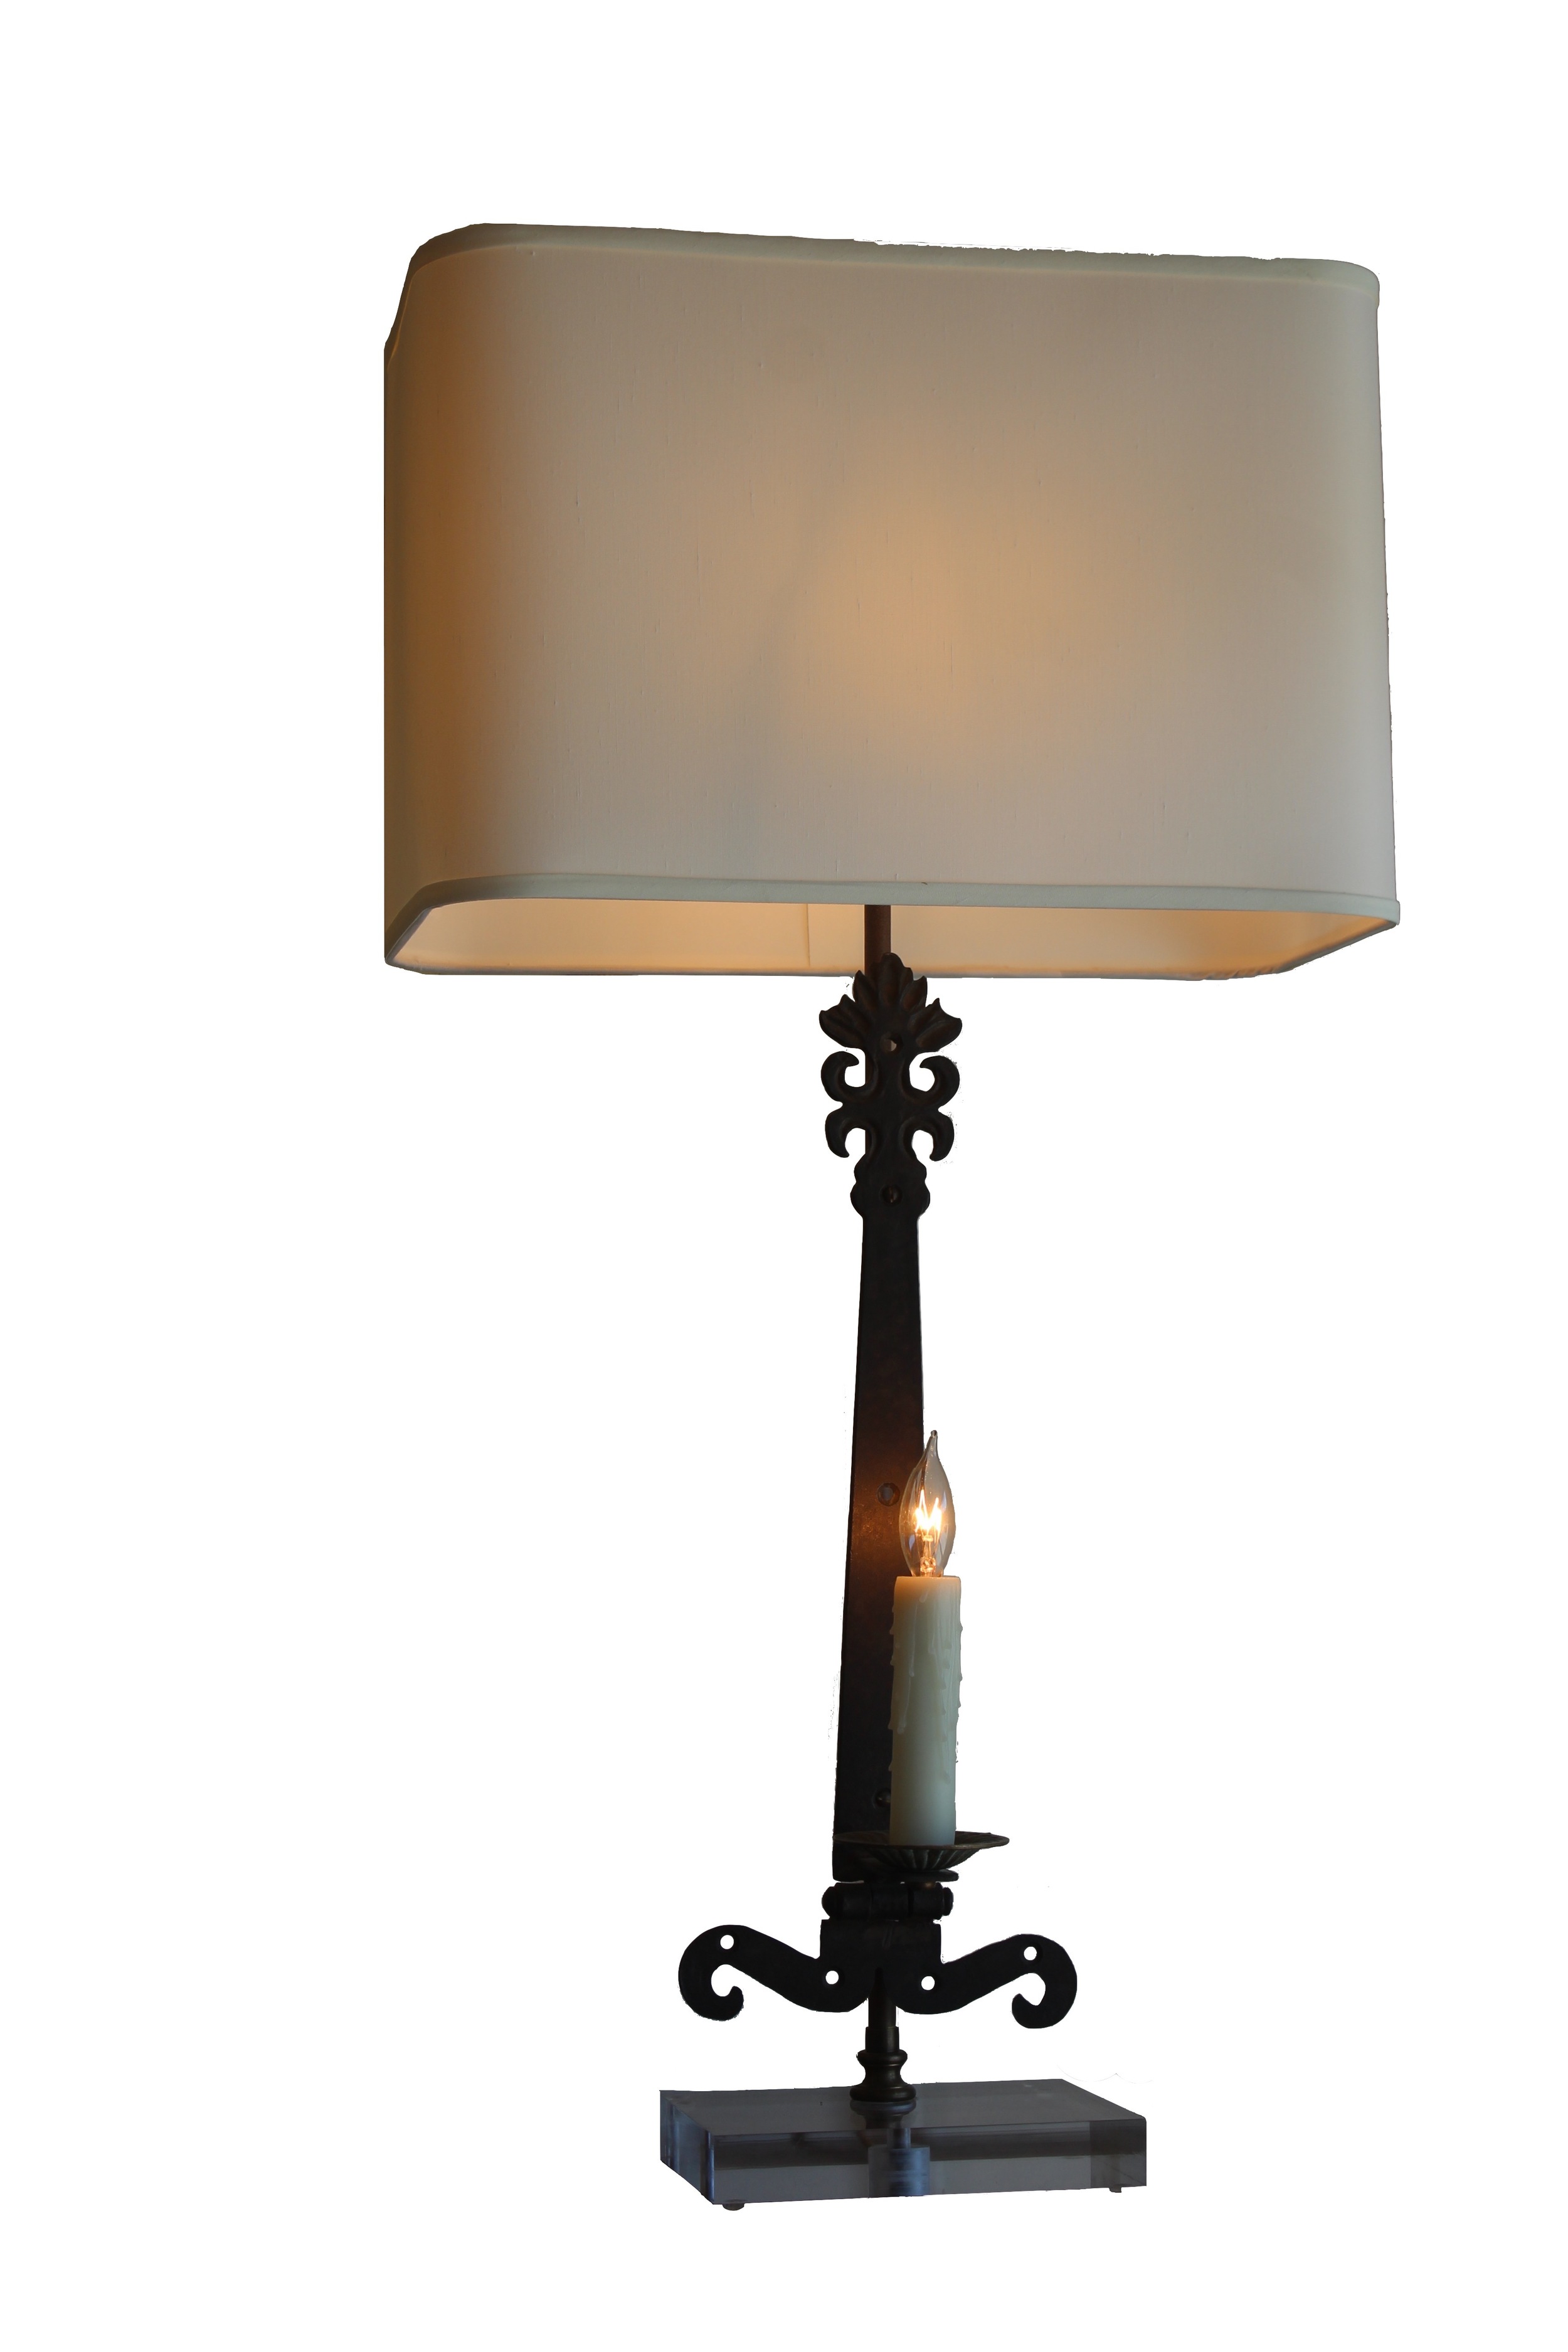 Iron Lamp on Lucite - $895